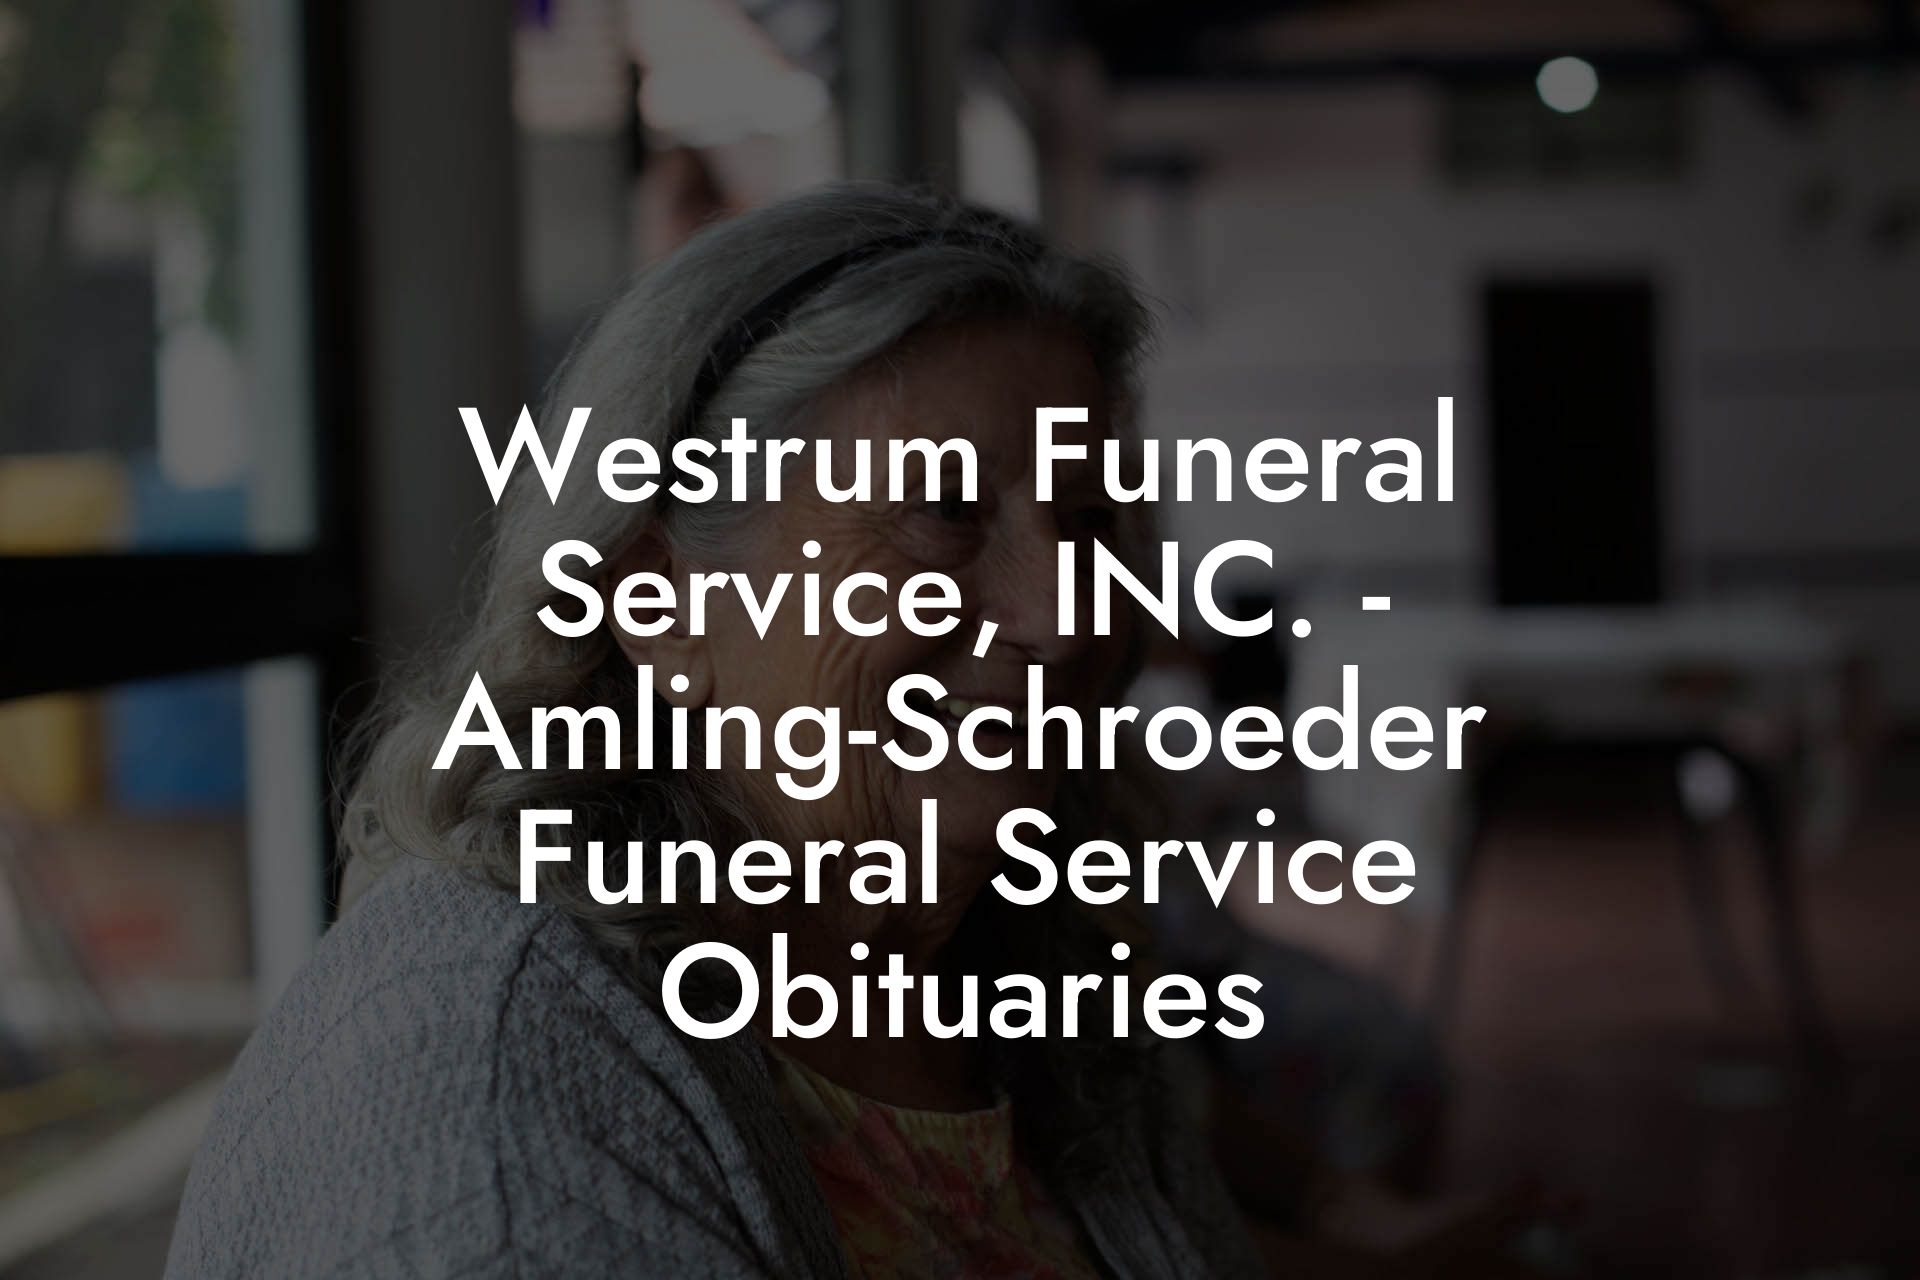 Westrum Funeral Service, INC. - Amling-Schroeder Funeral Service Obituaries